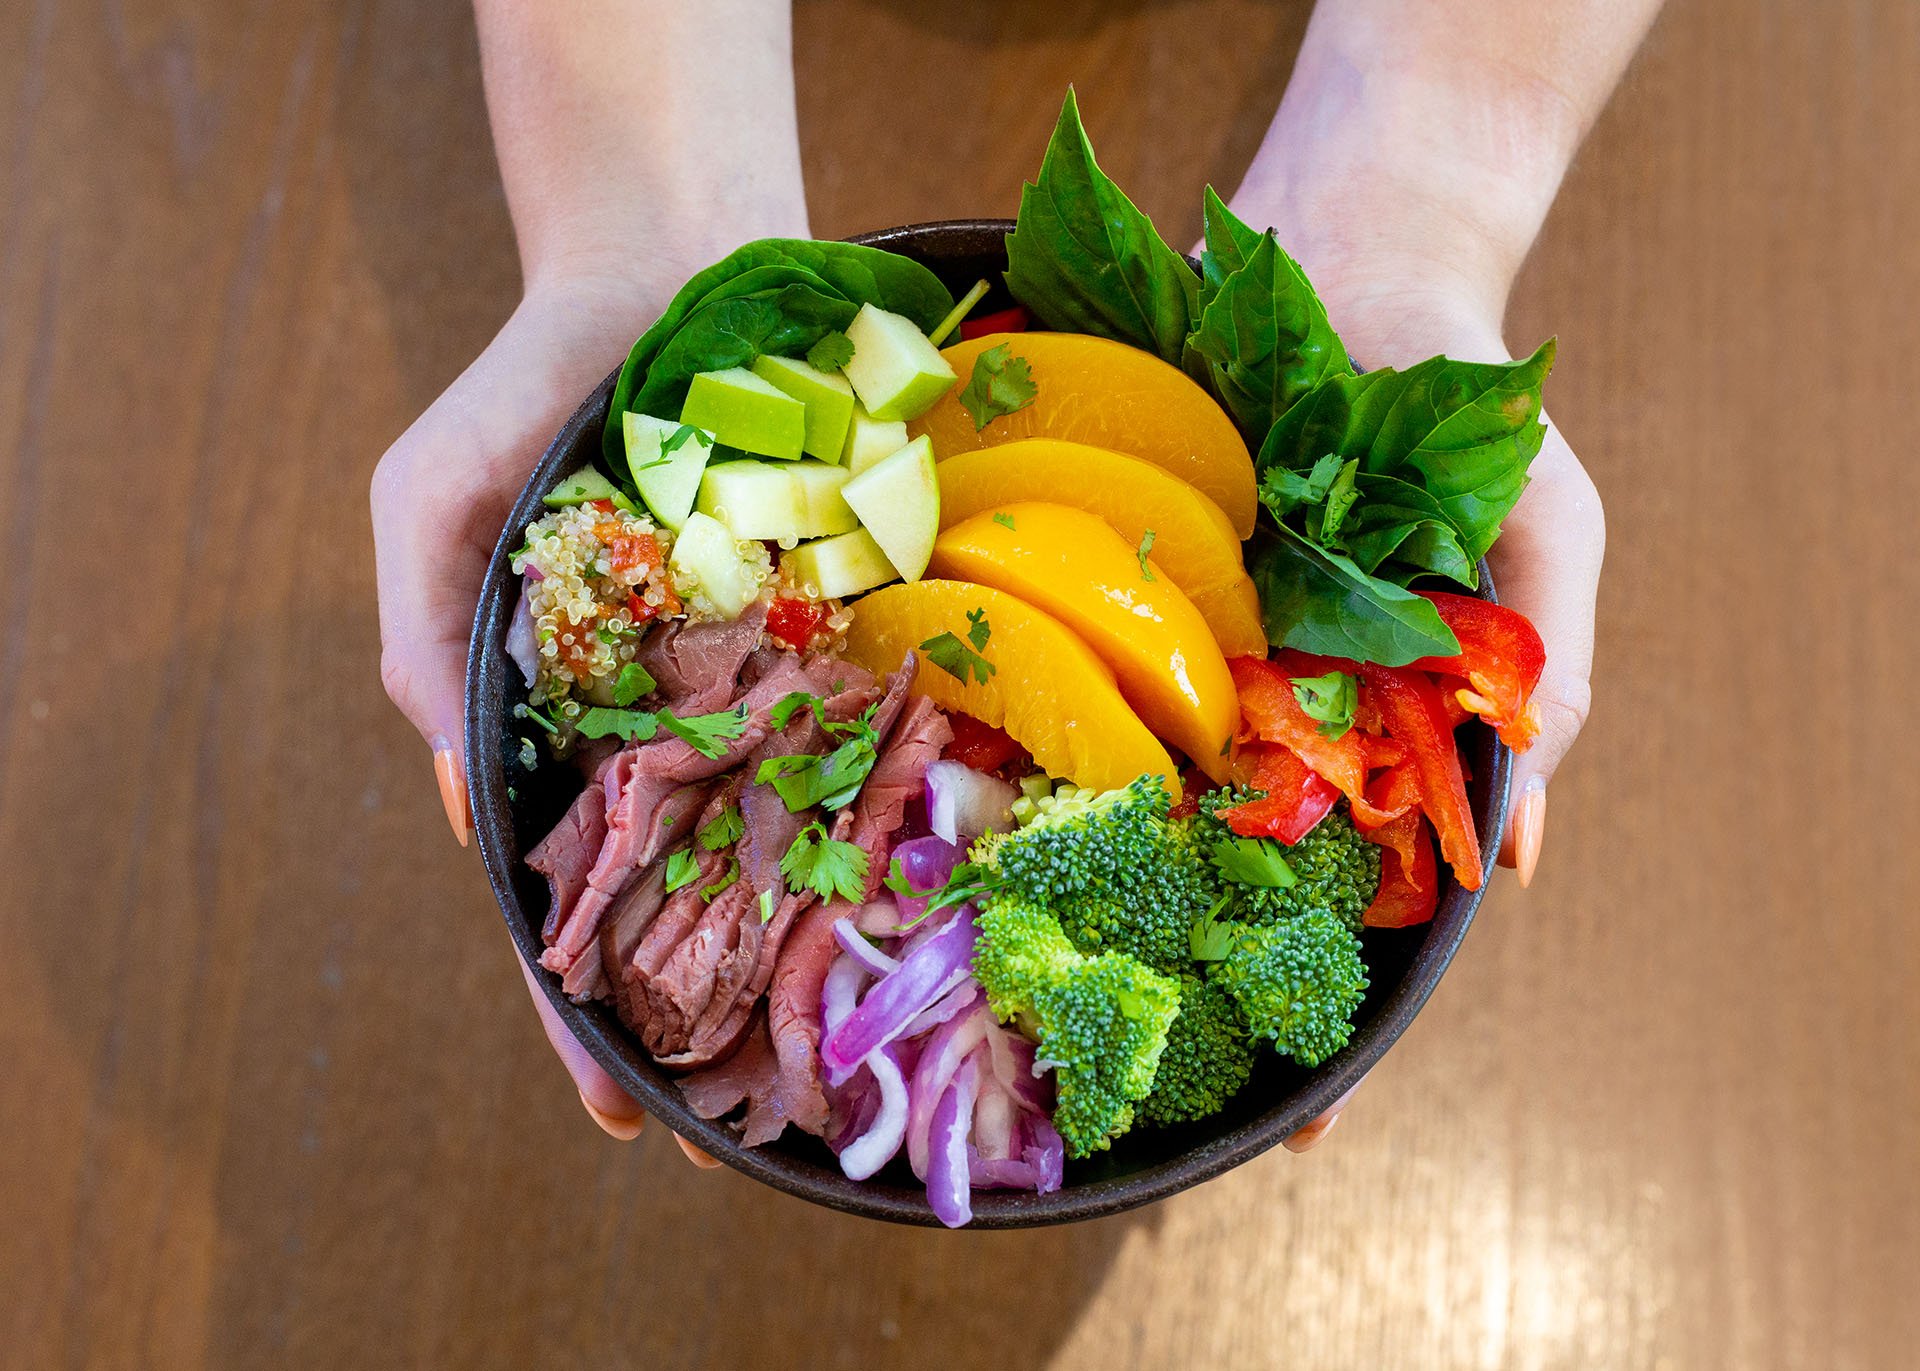 The Food Rainbow Series: Stimulating Your Appetite Through Aesthetics